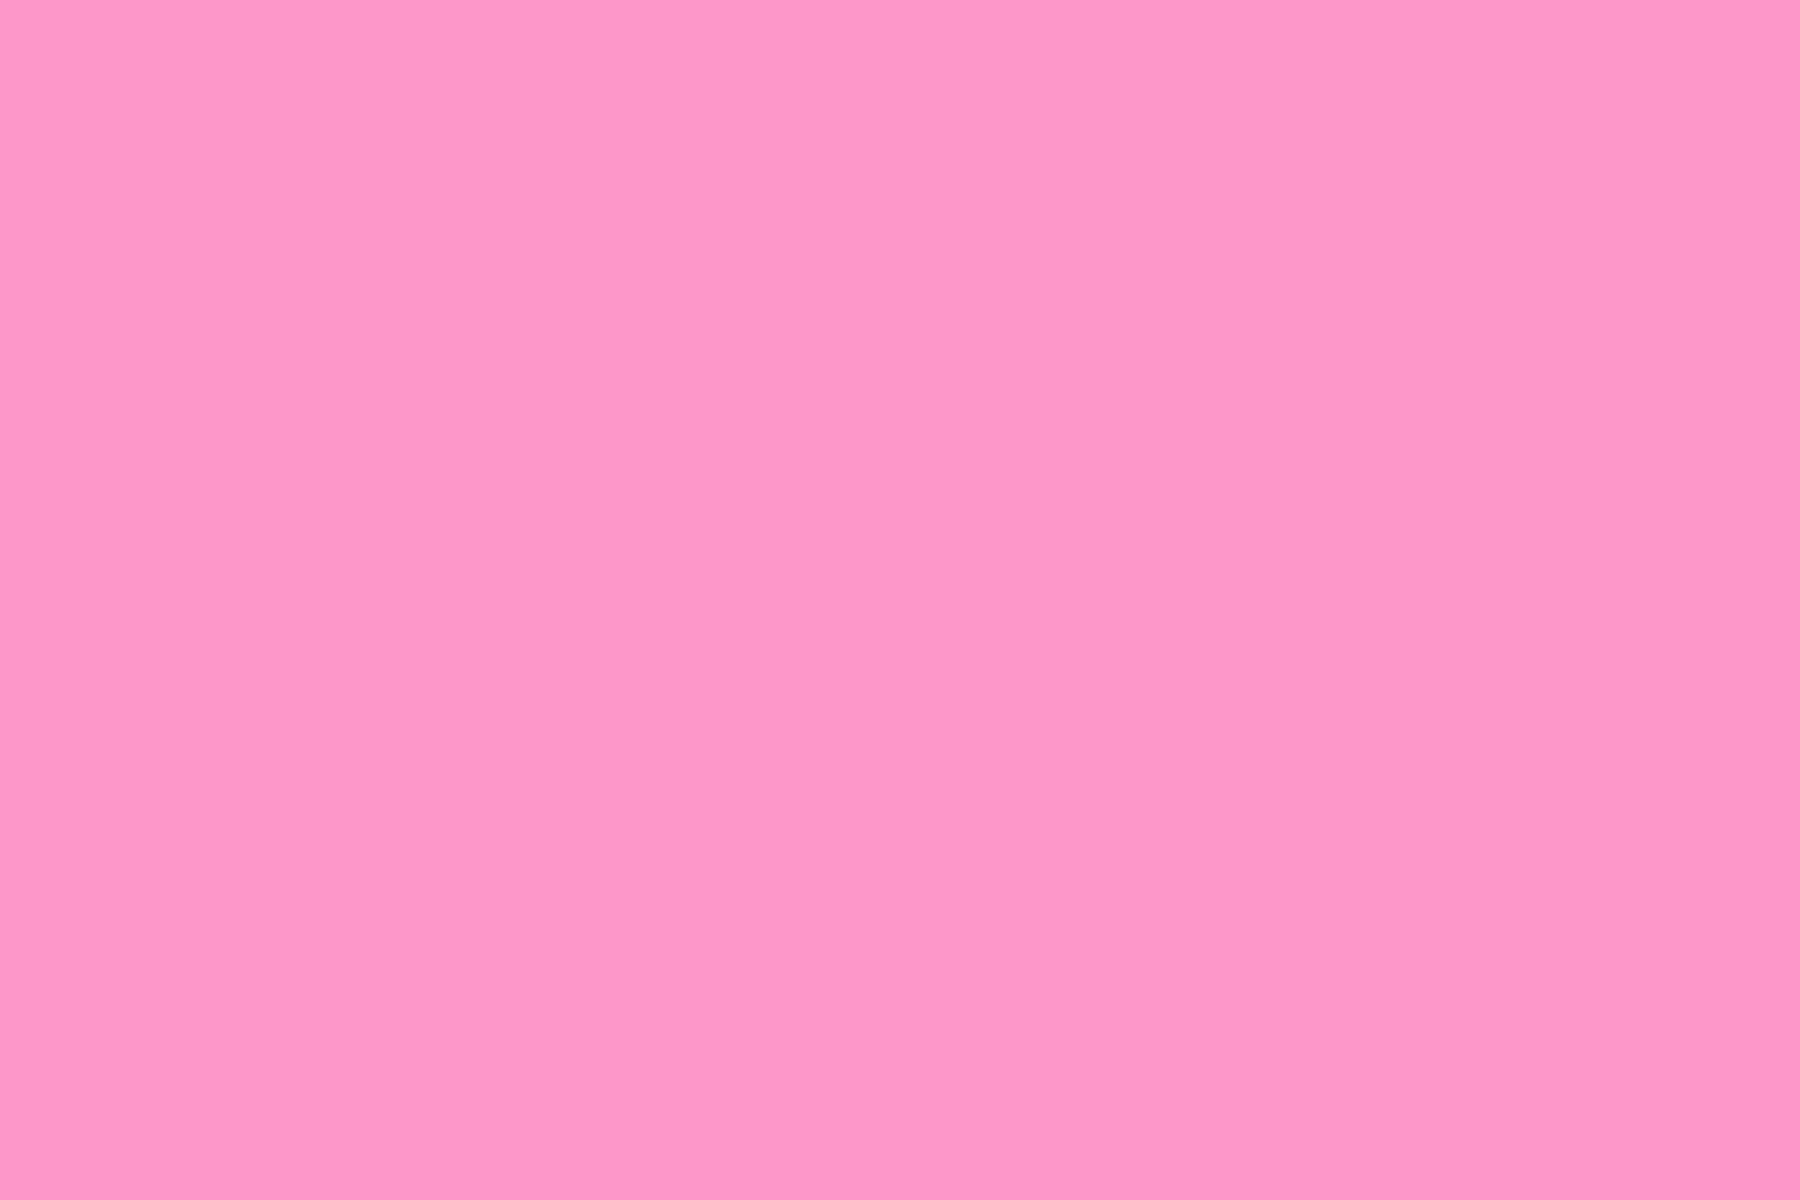 Baby Pink Background Images - Free Download on Freepik